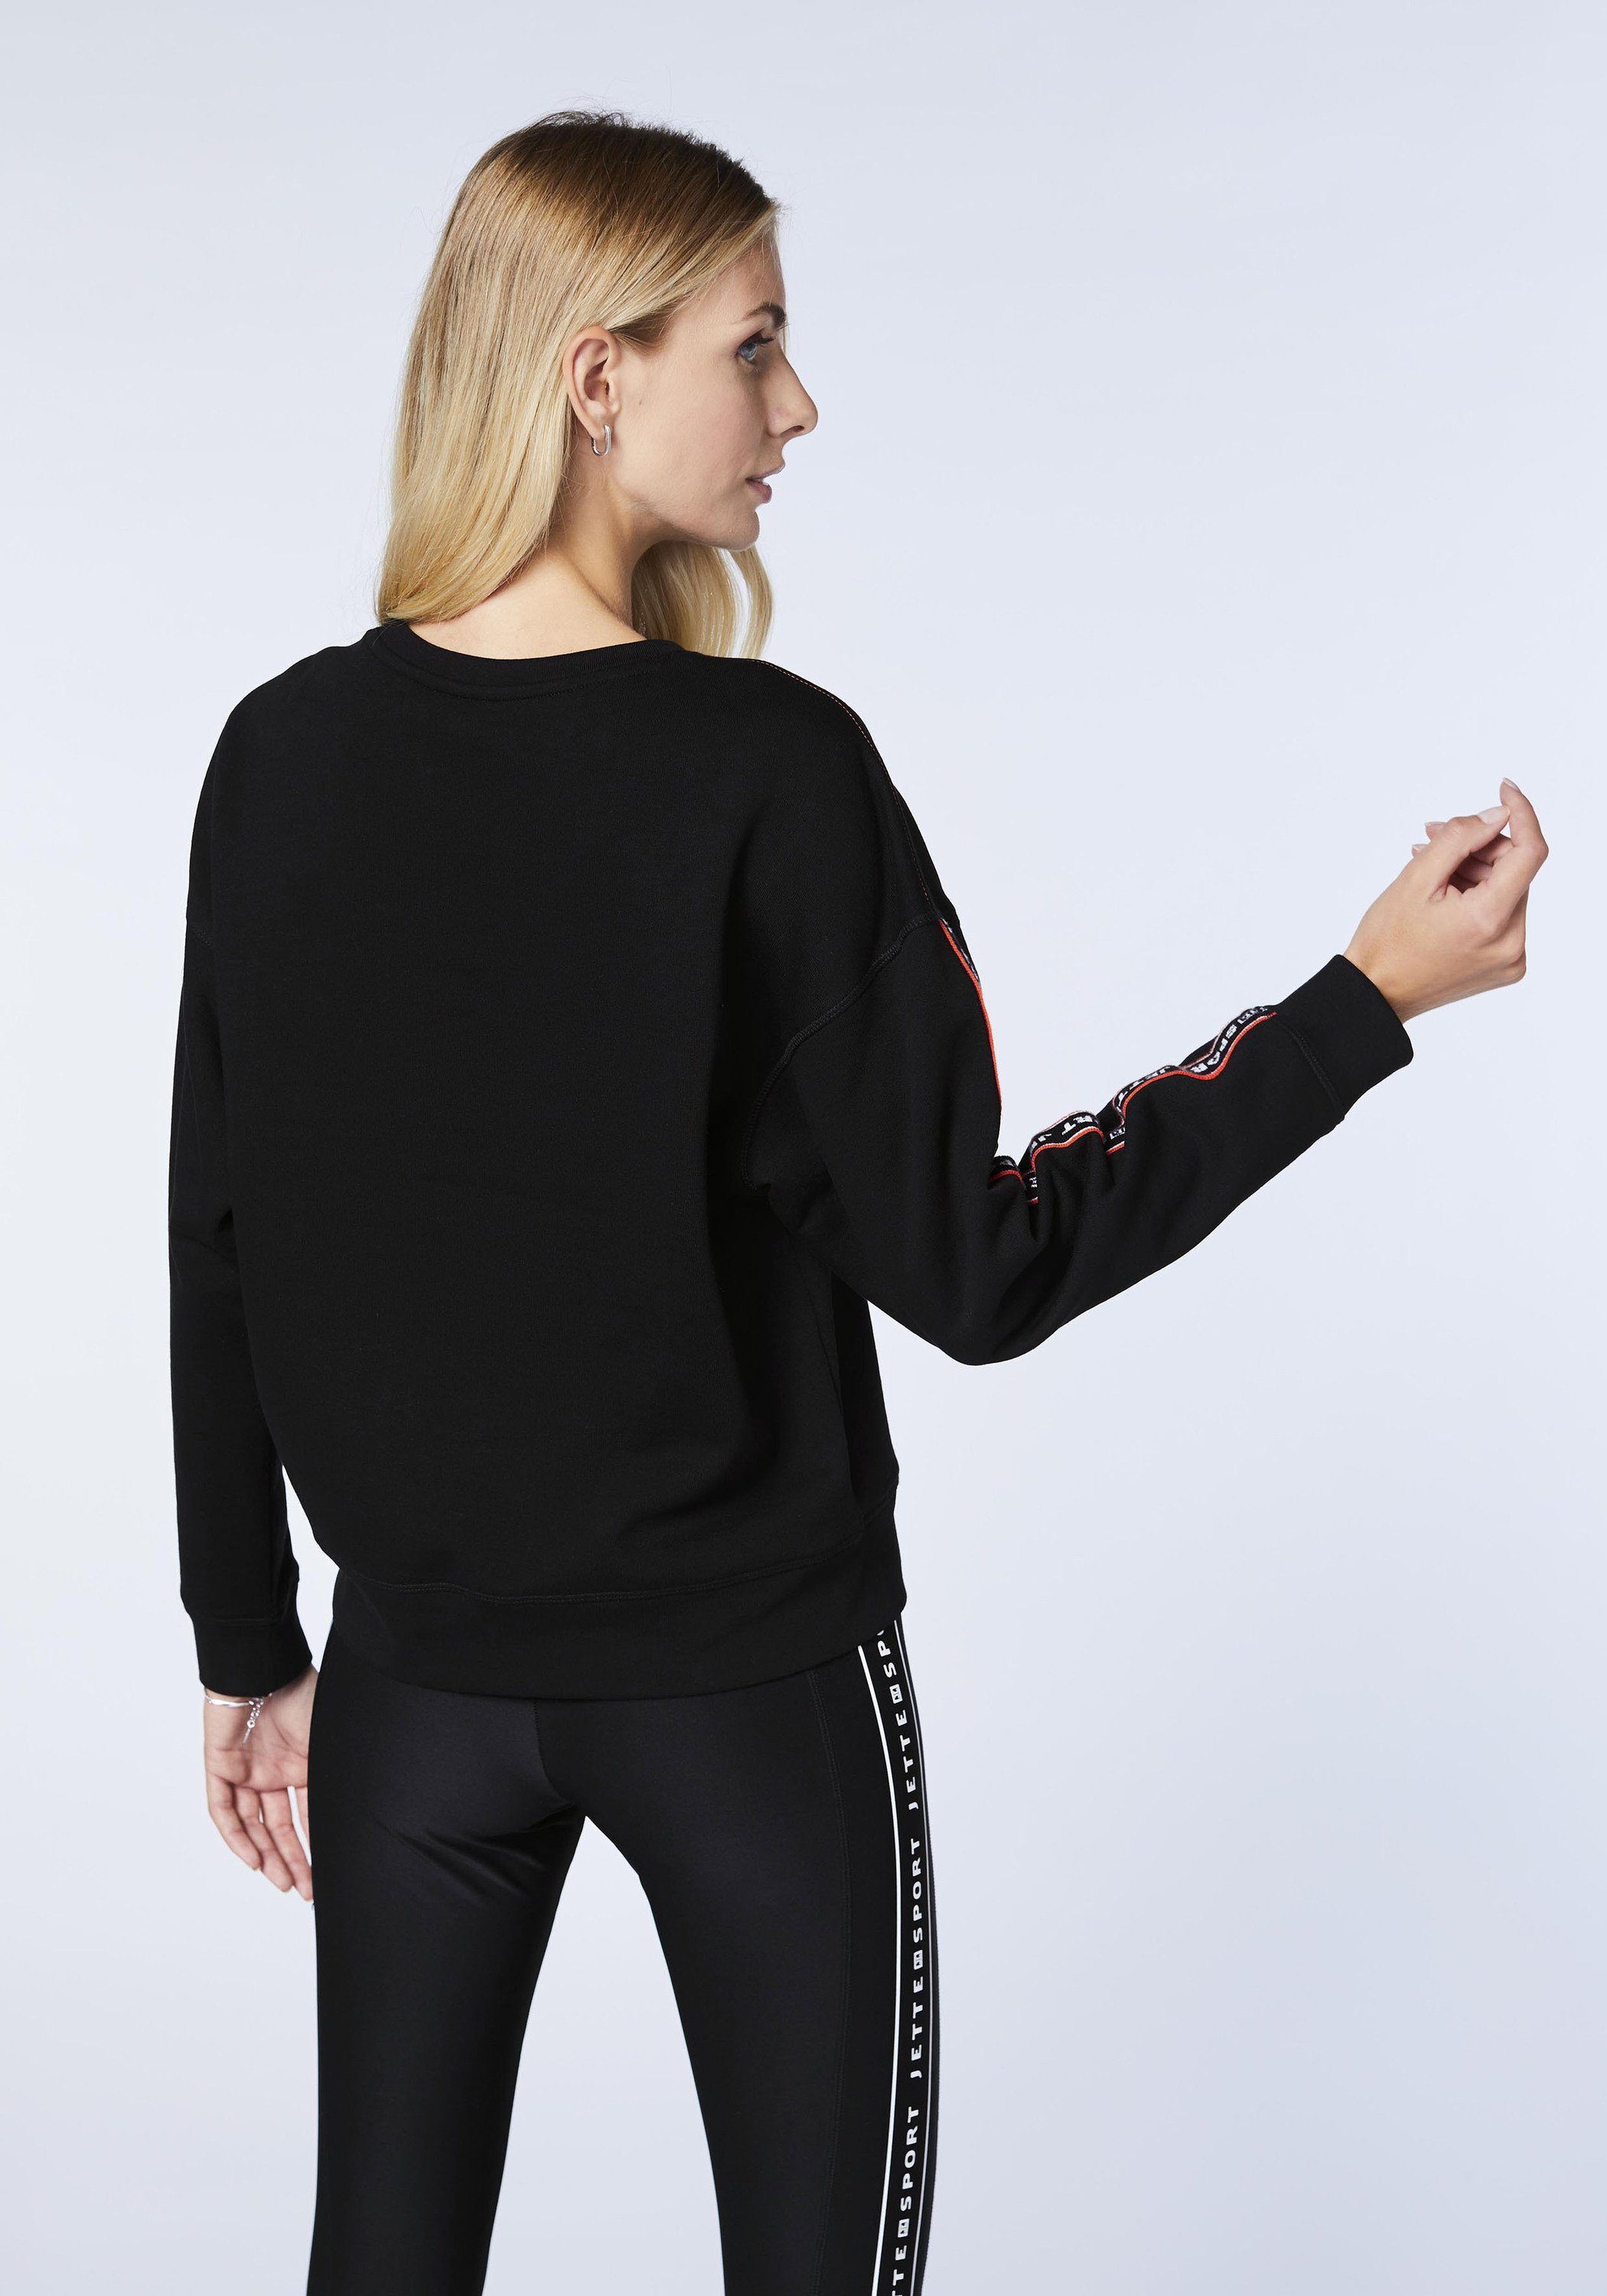 JETTE SPORT Deep Sweatshirt im 19-3911 Black Label-Design